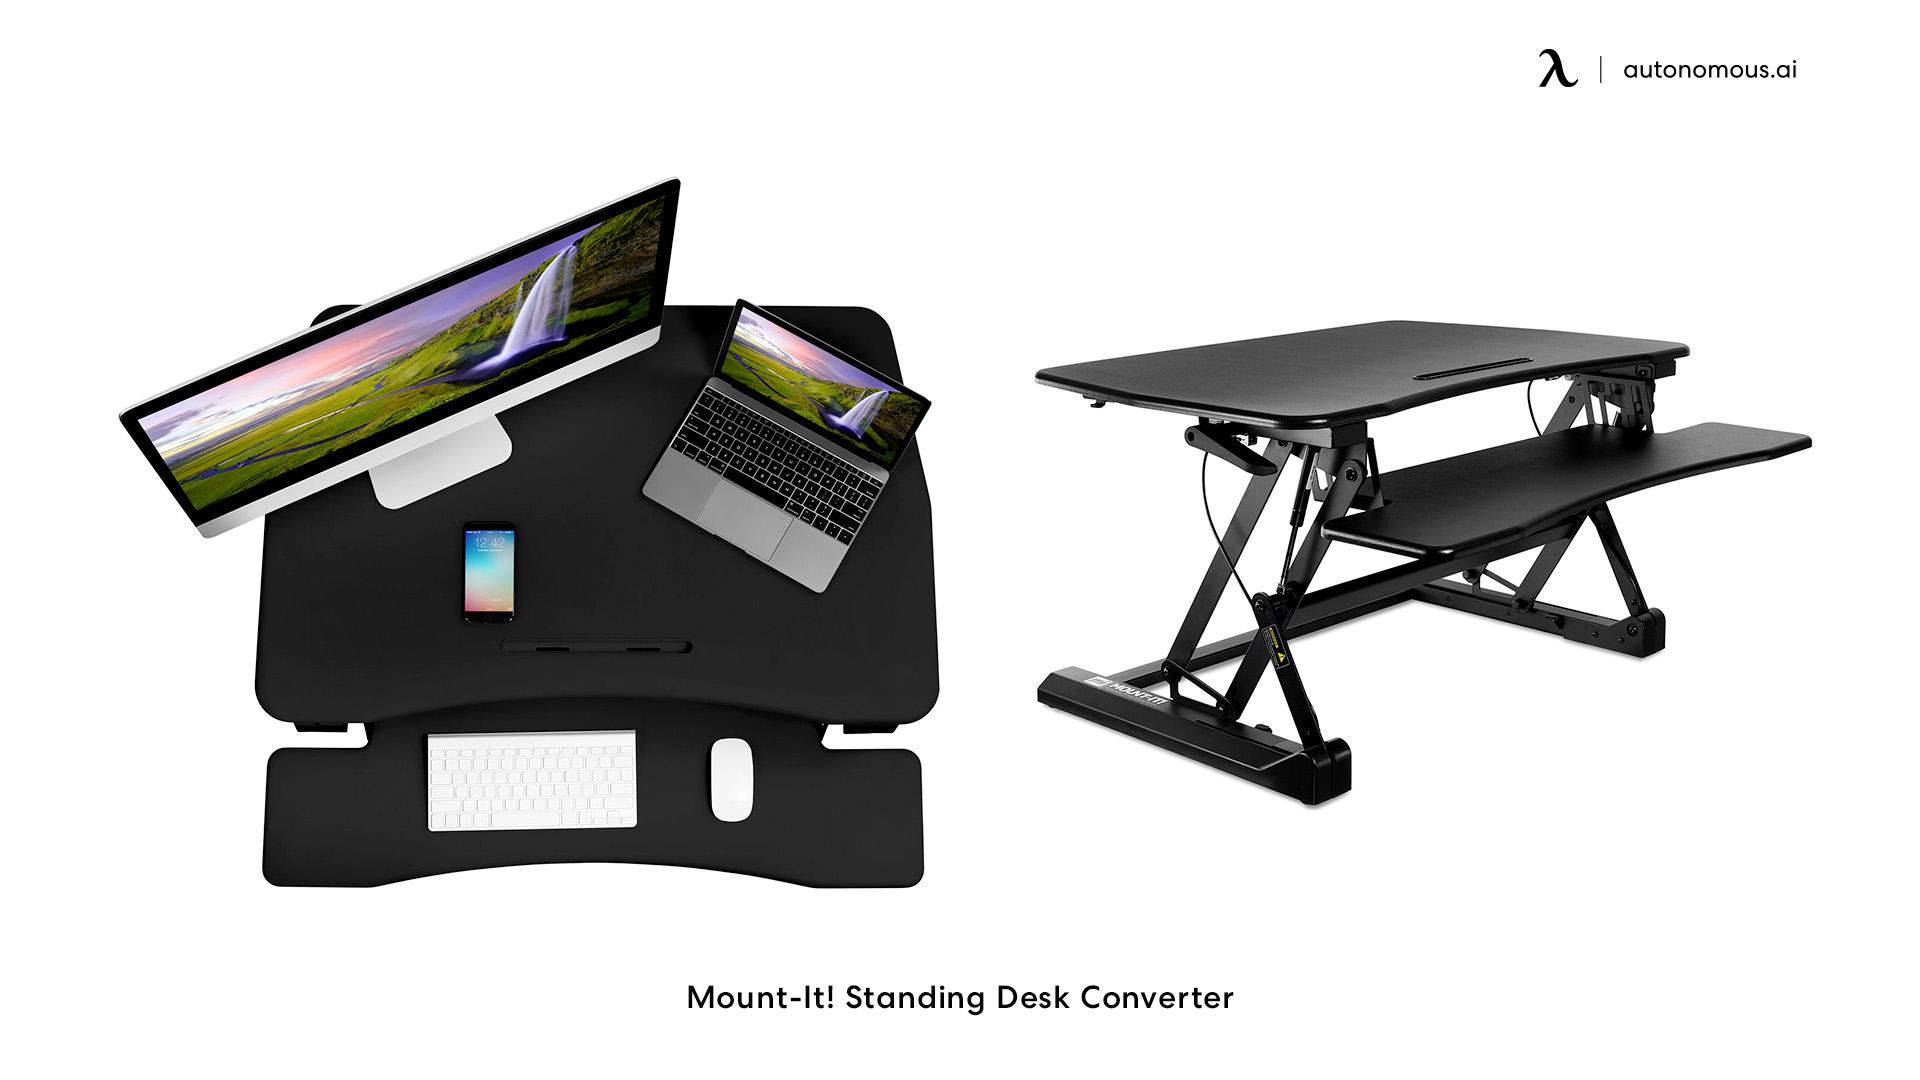 Standing Desk Converter by Mount-It!